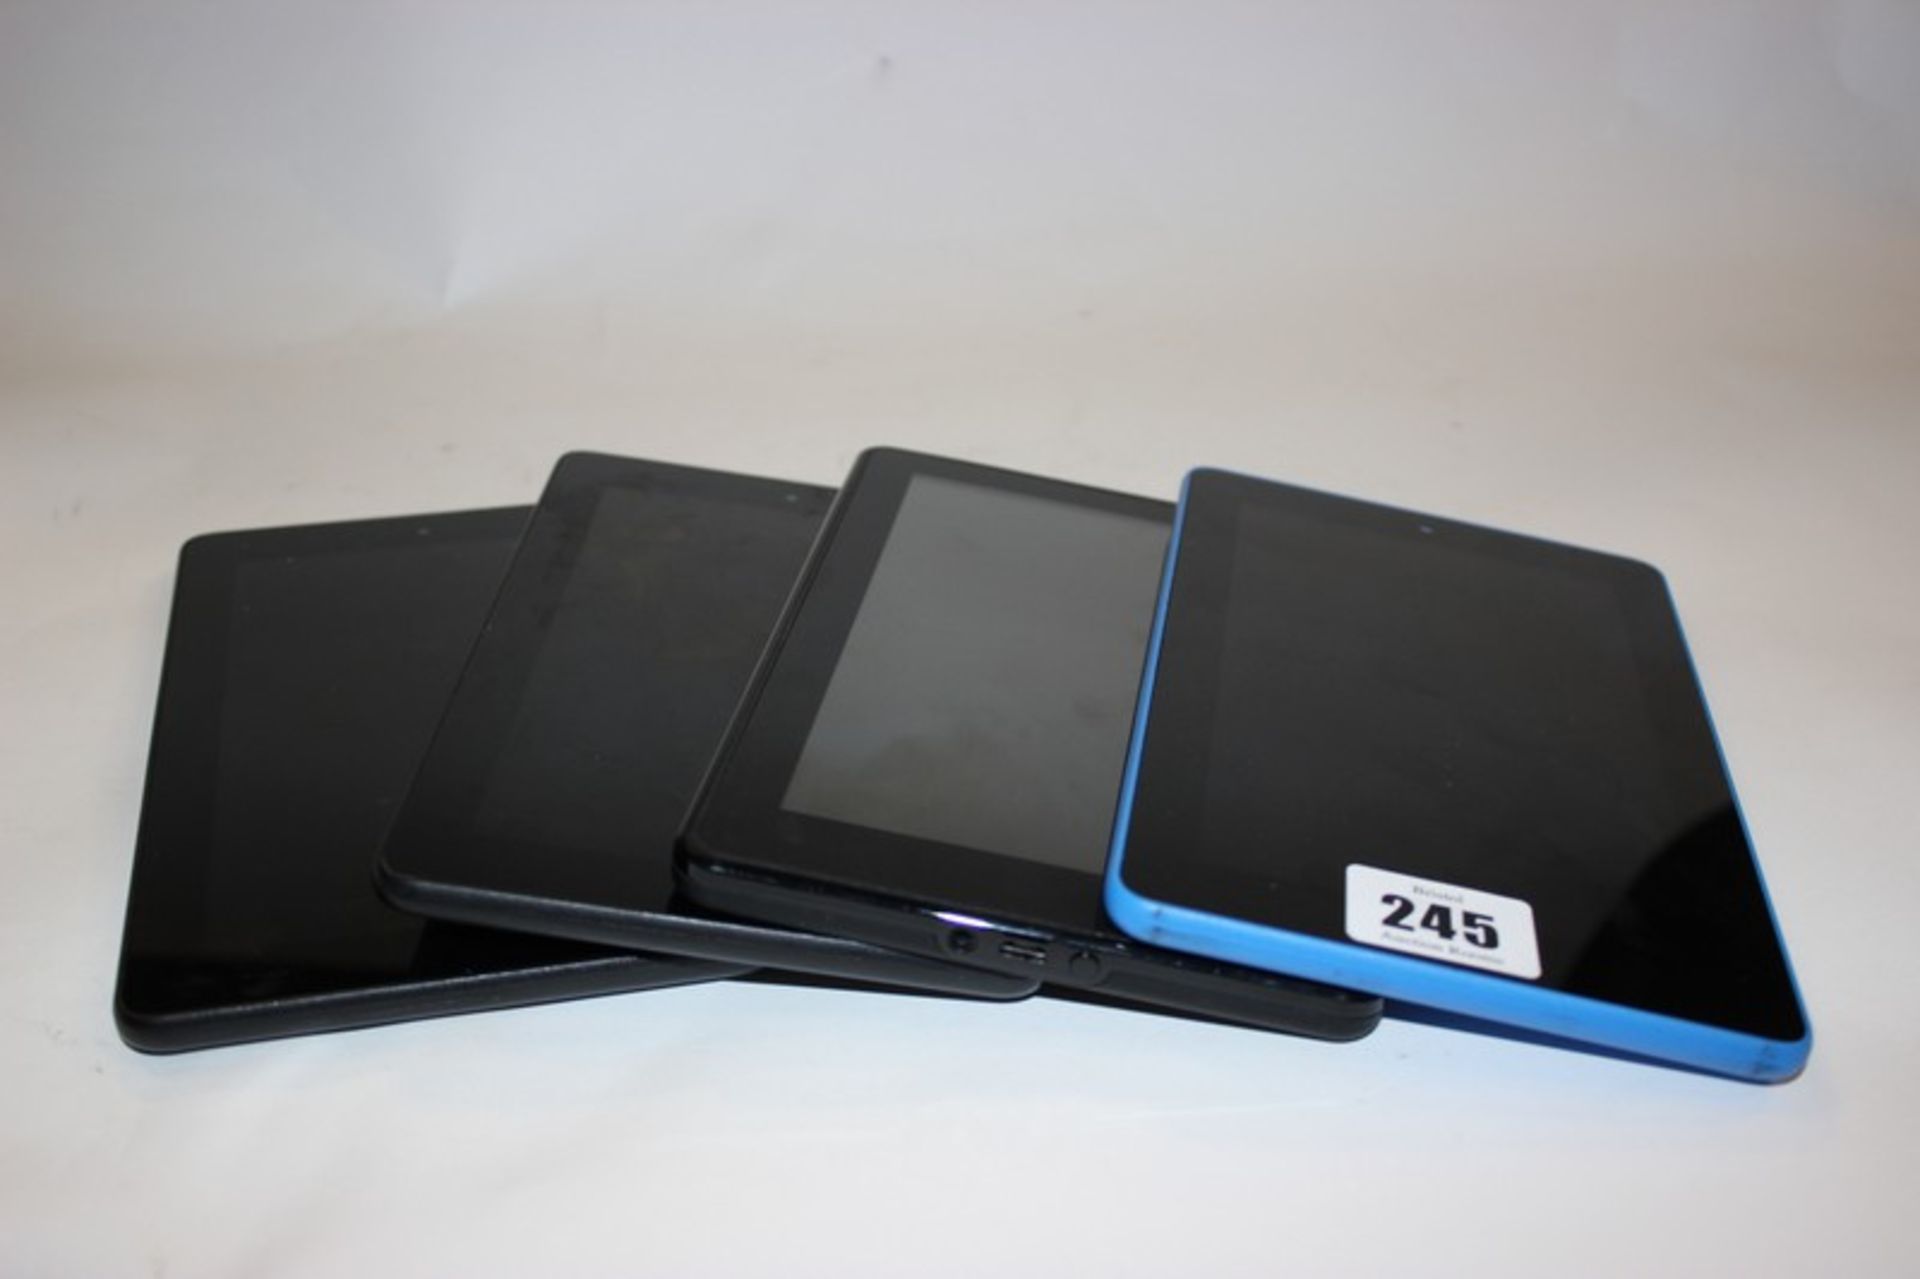 Three Amazon Kindle Fire 5th Generation model: SV98LN and an Amazon Kindle Fire model: D01400.